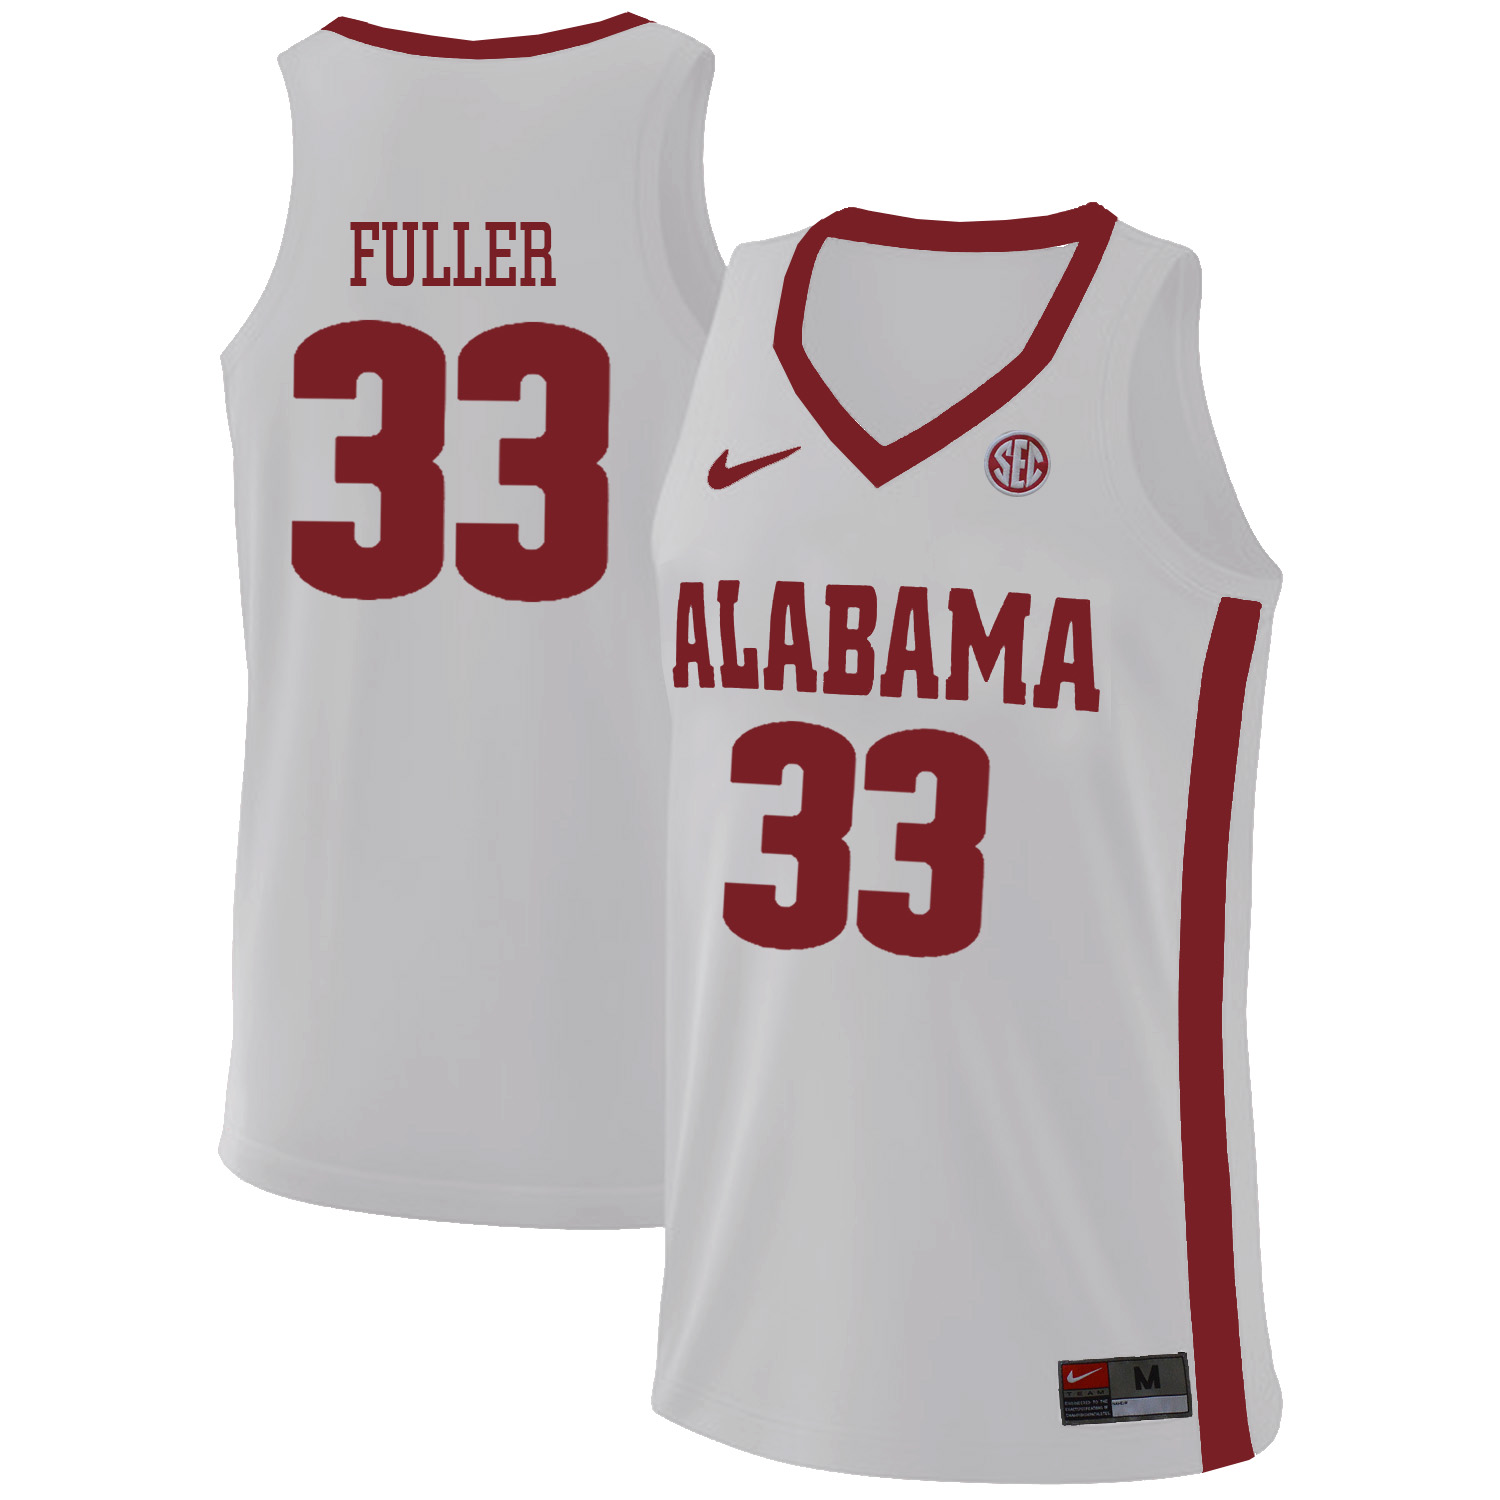 Alabama Crimson Tide 33 Landon Fuller White College Basketball Jersey